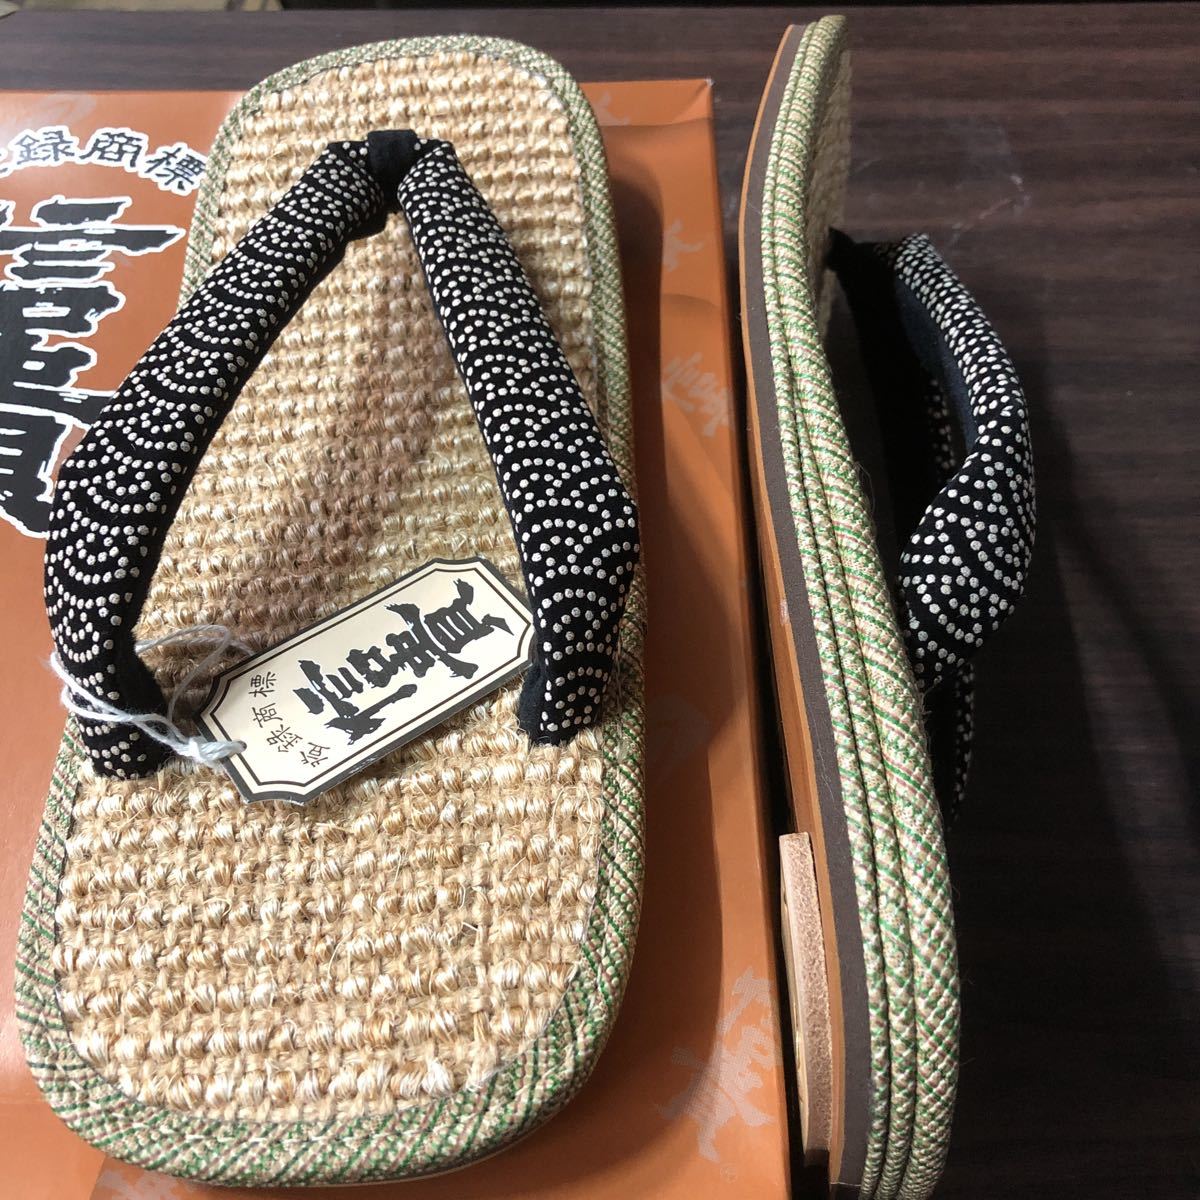  gentleman sandals setta bottom. length 26cm width 10cm made in Japan 3800 jpy. goods .2500 jpy .